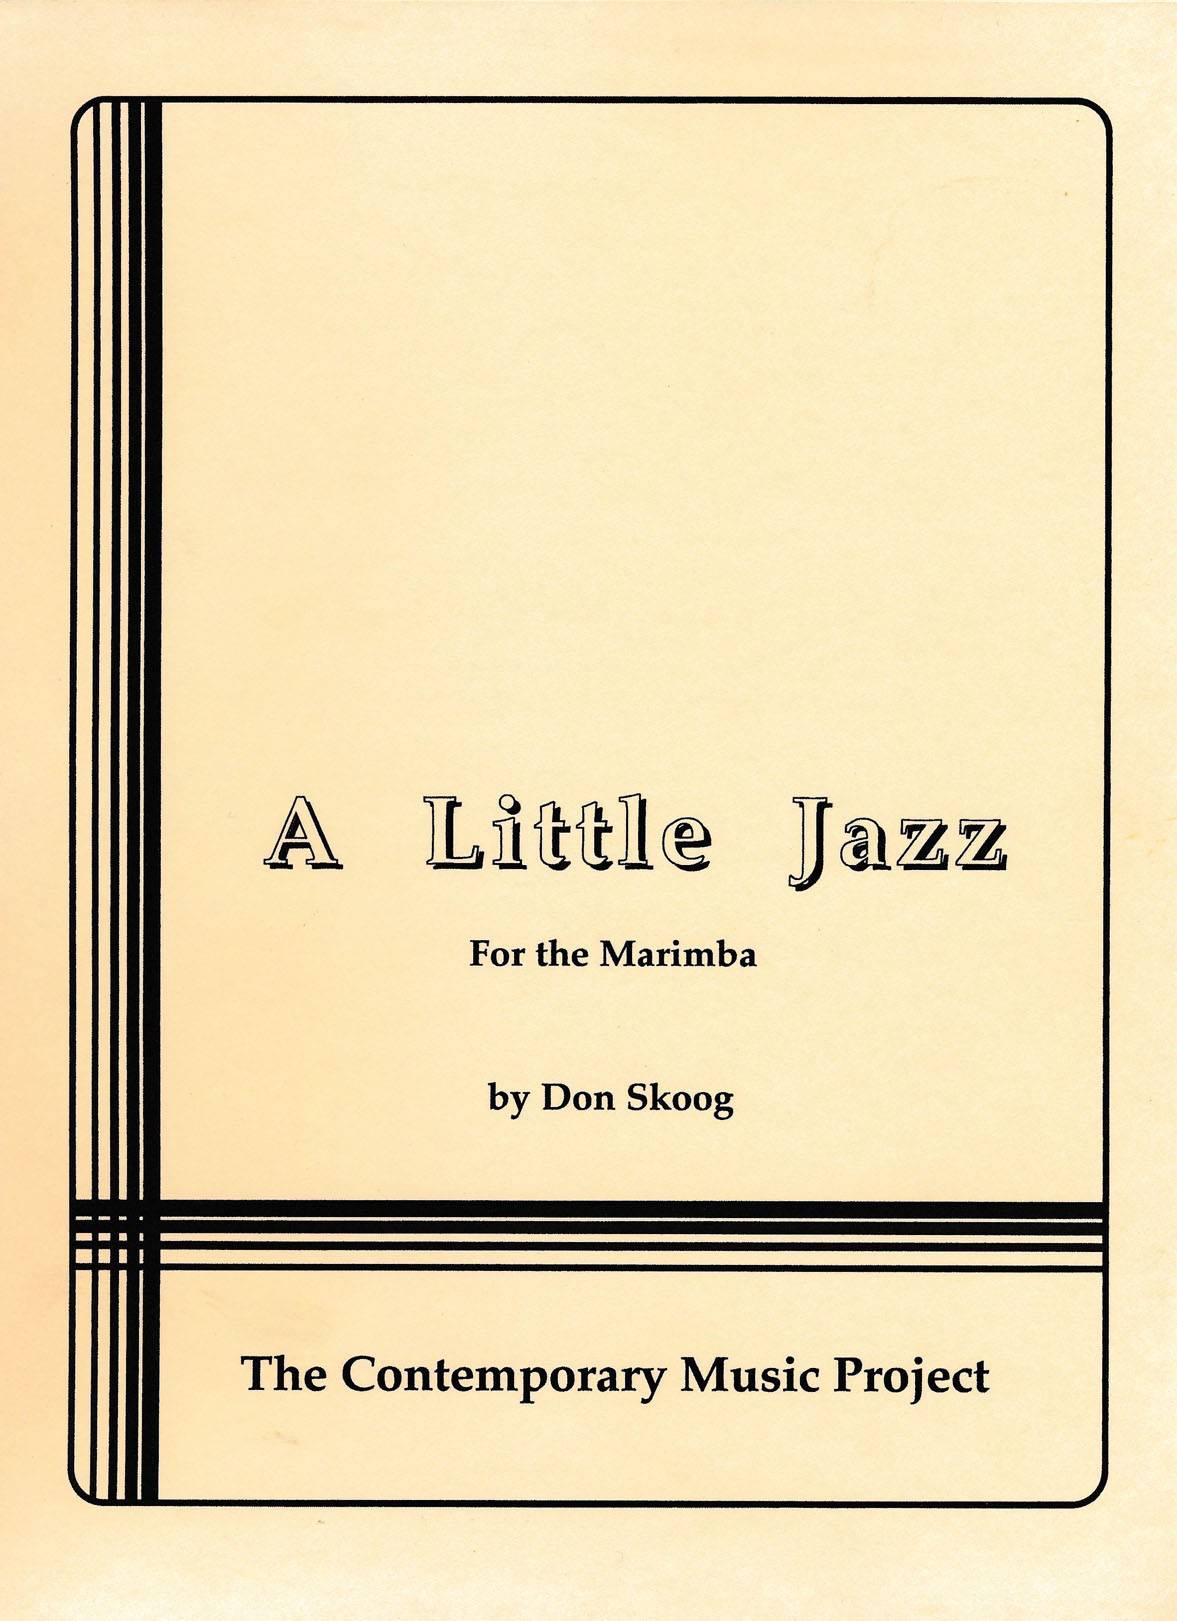 A Little Jazz by Donald Skoog